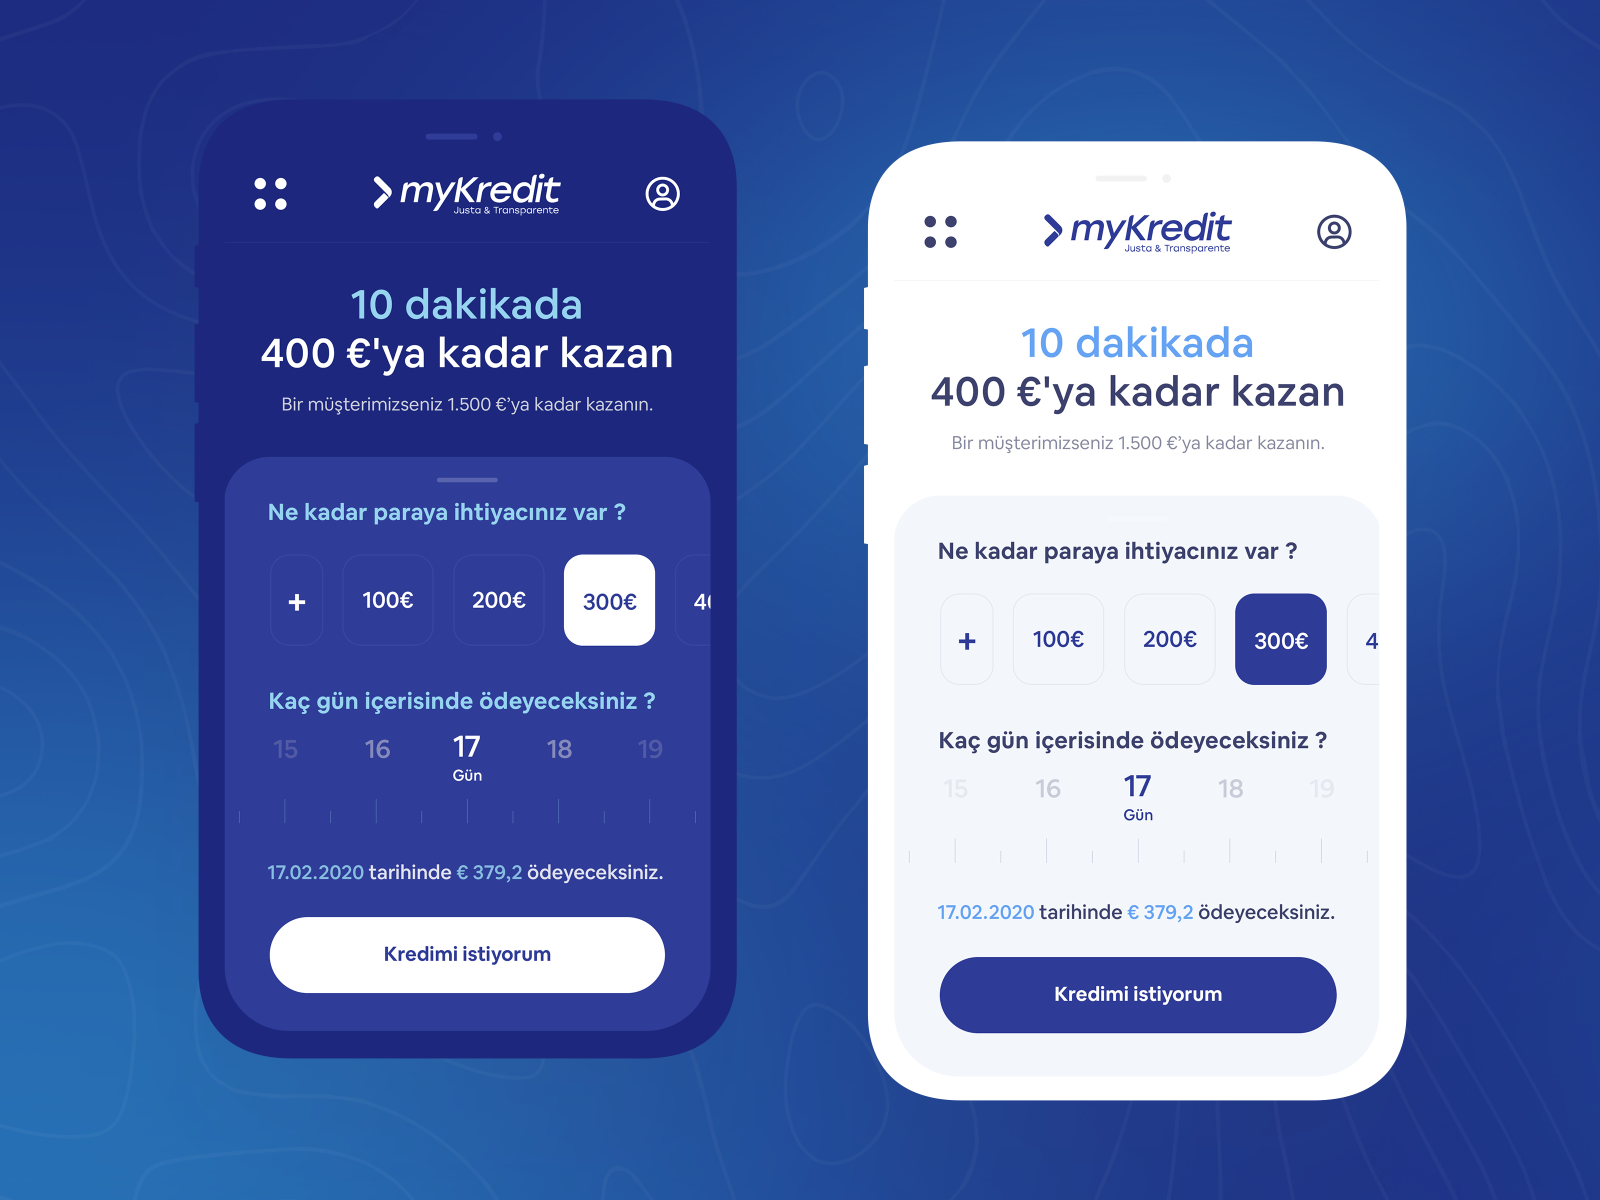 myKredit Mobile Website Redesign by ibrahim bayram on Dribbble